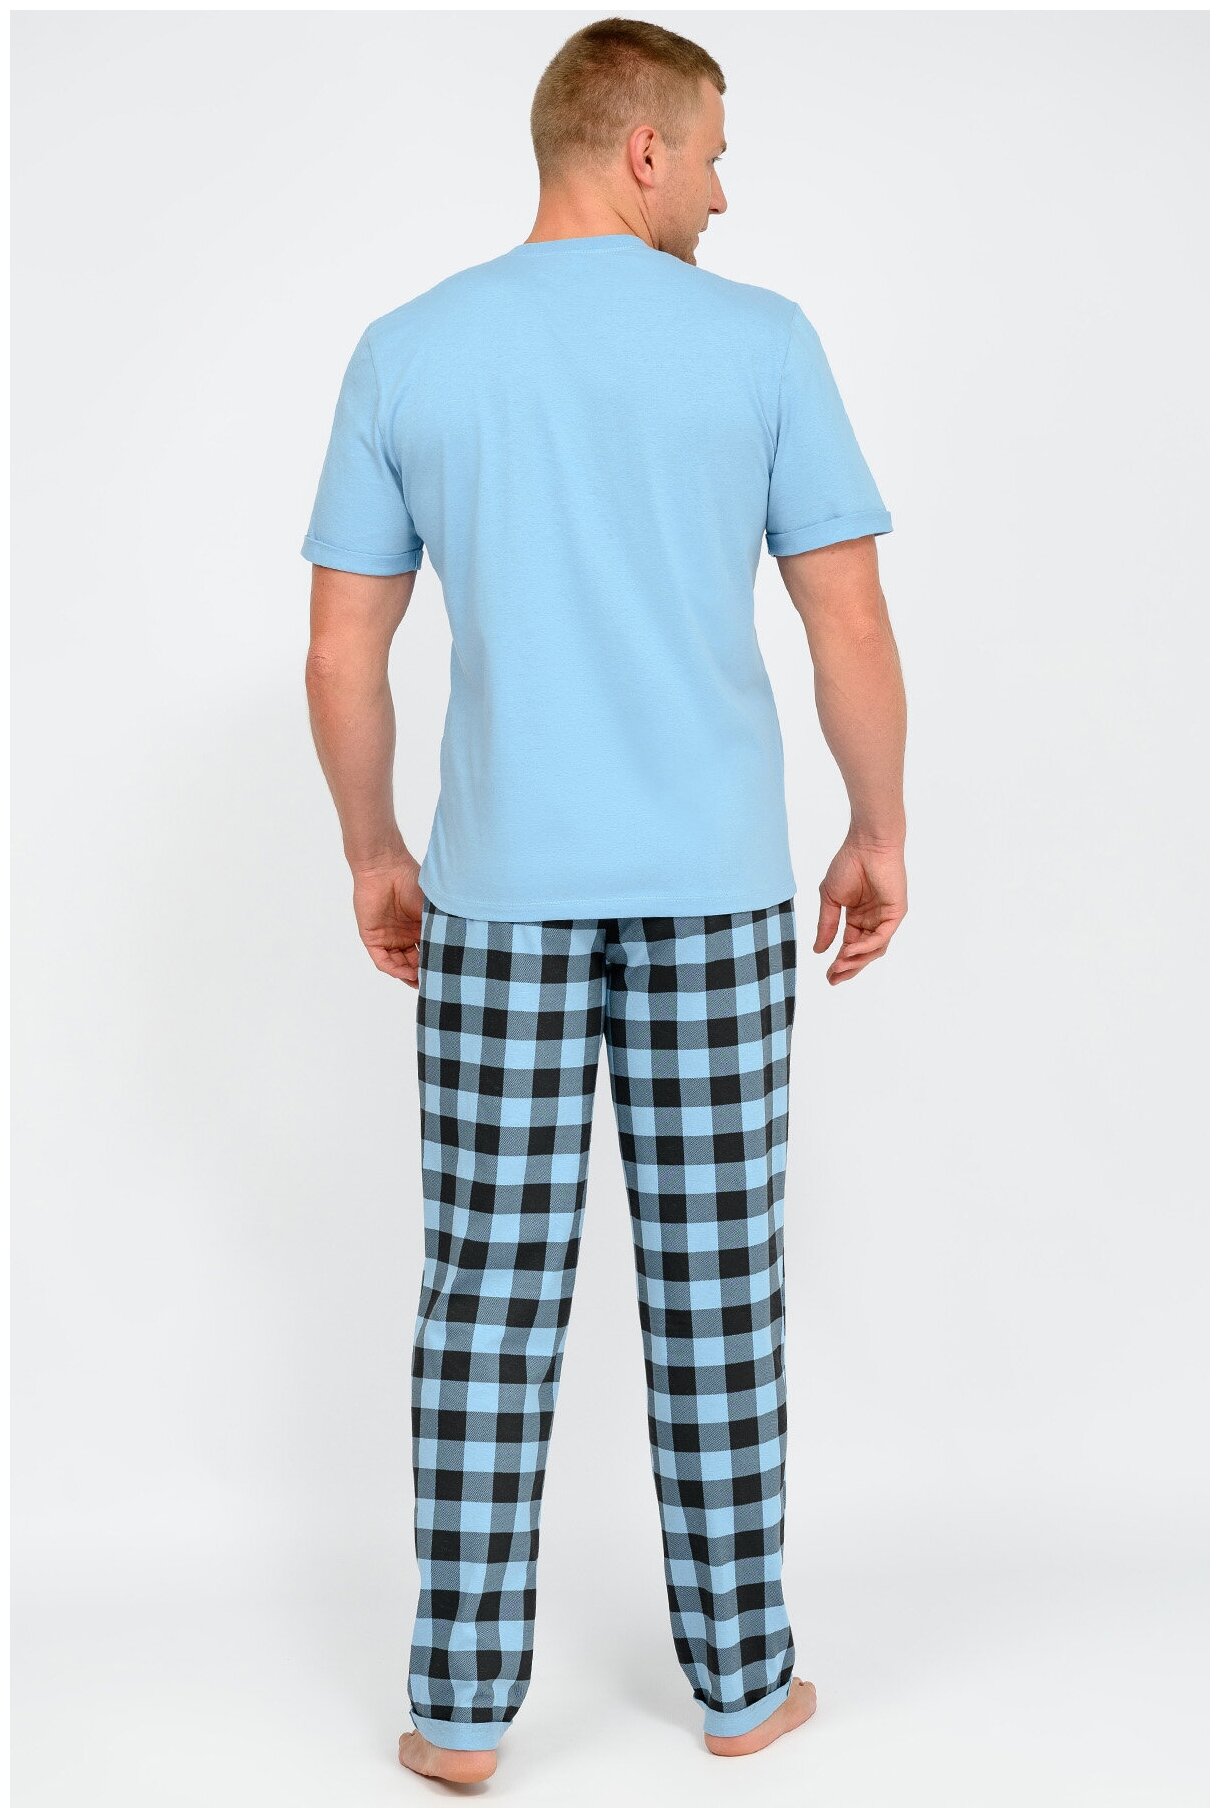 Пижама Ш'аrliзе, брюки, трикотажная, размер 56, голубой - фотография № 9